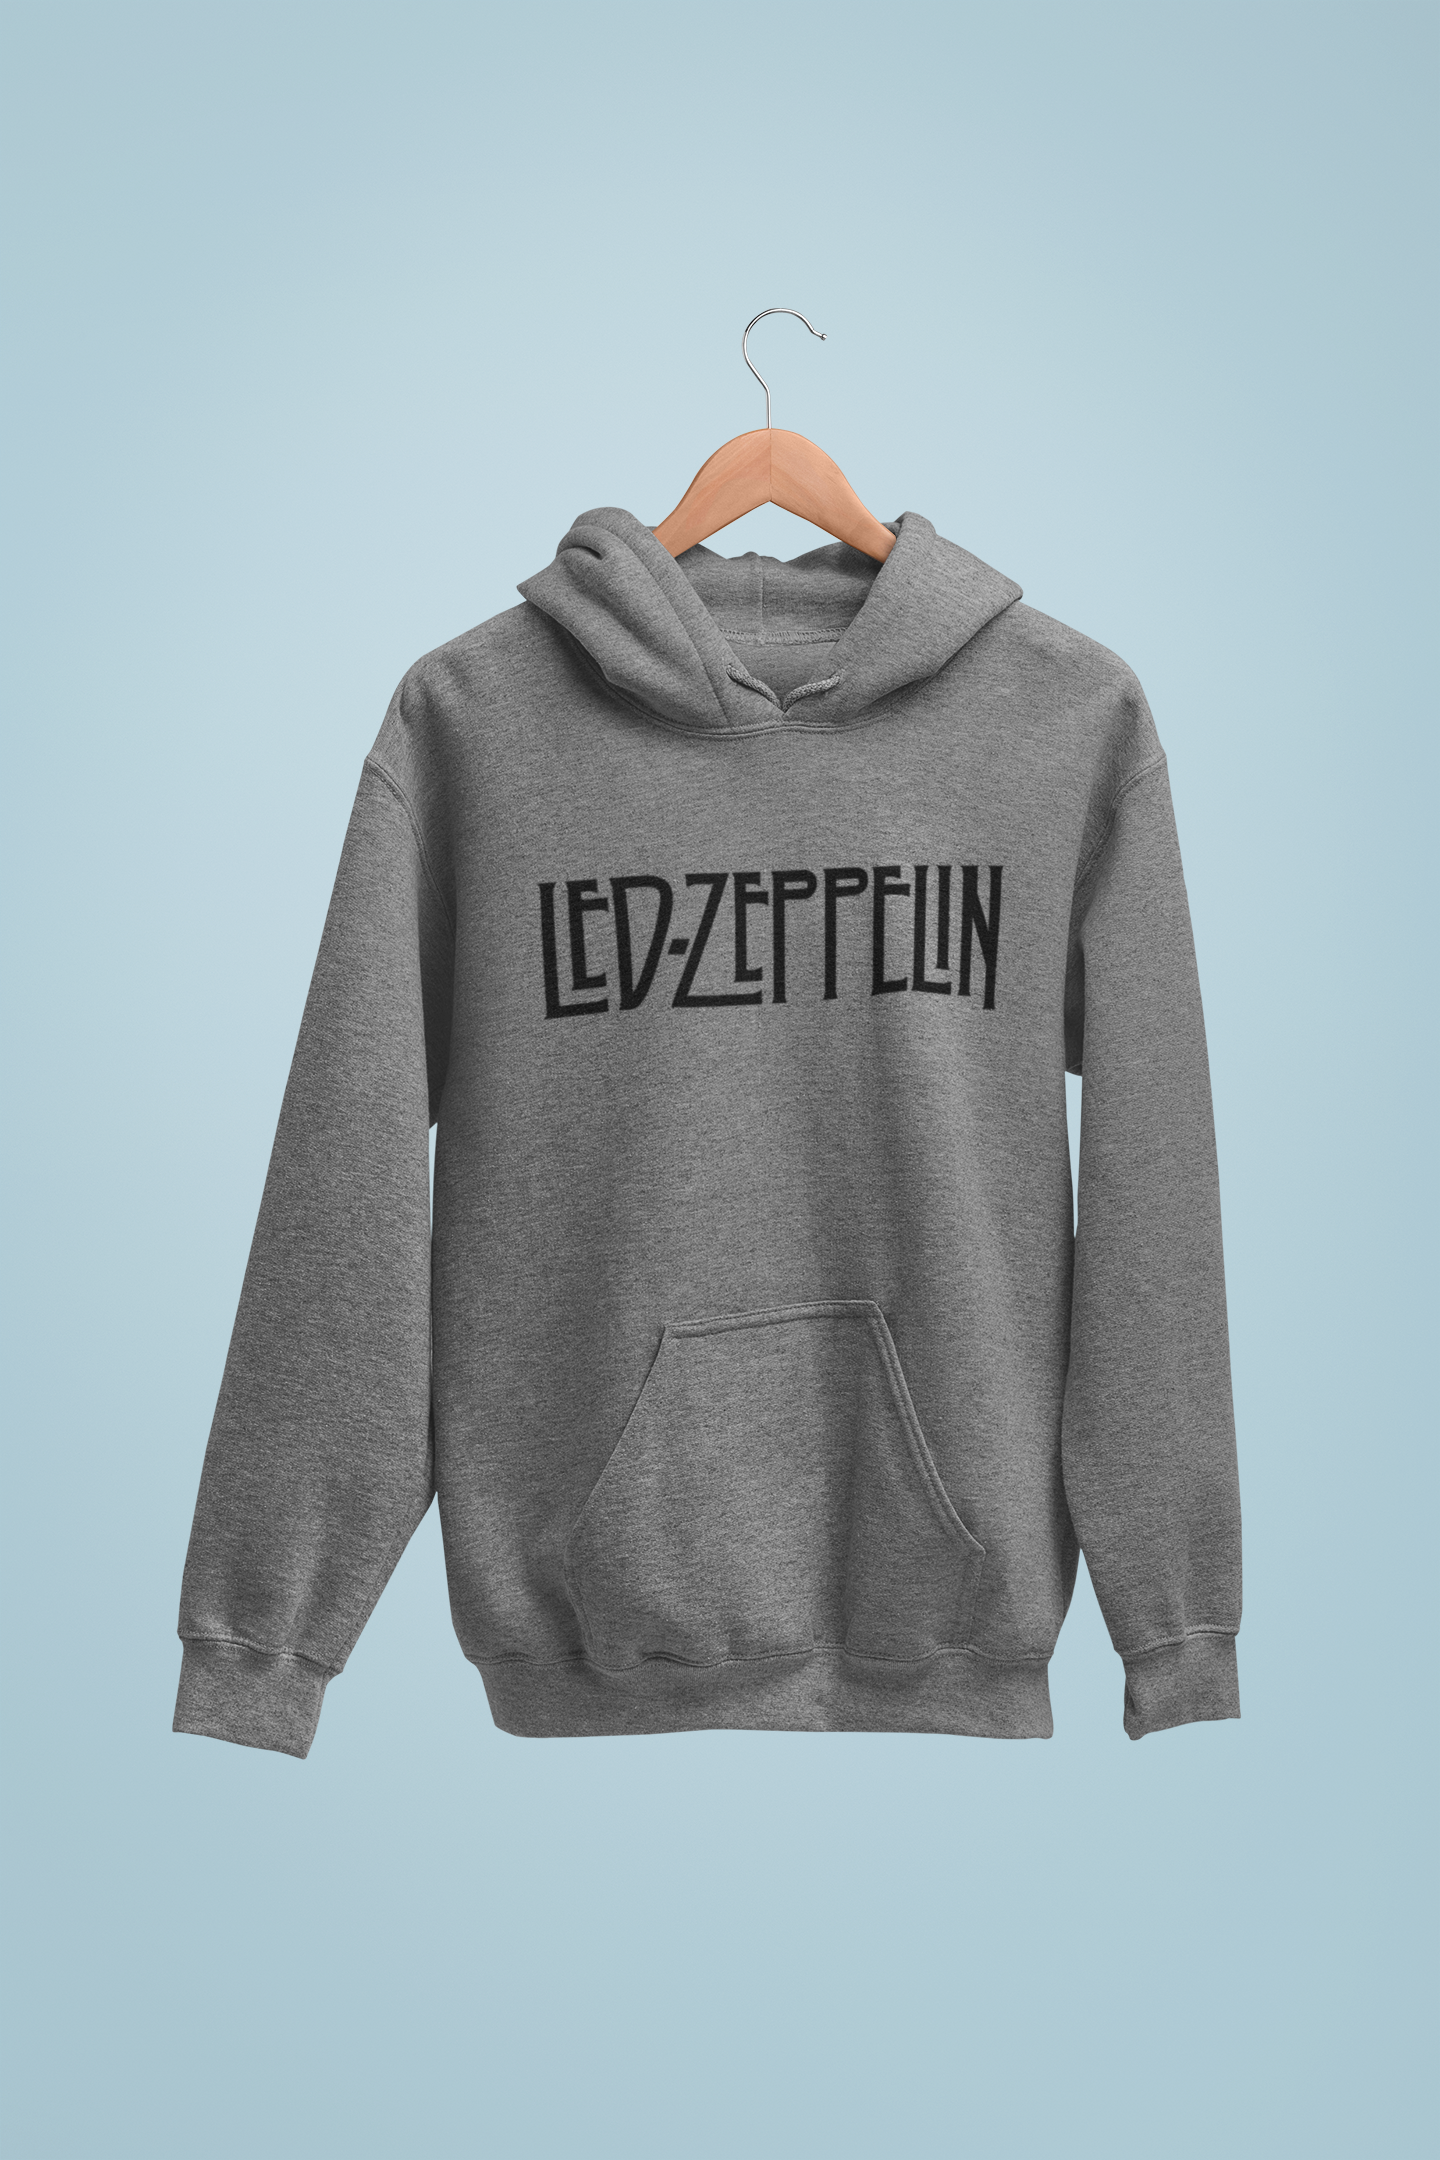 Moletom "Led Zeppelin" - Clássico - Música